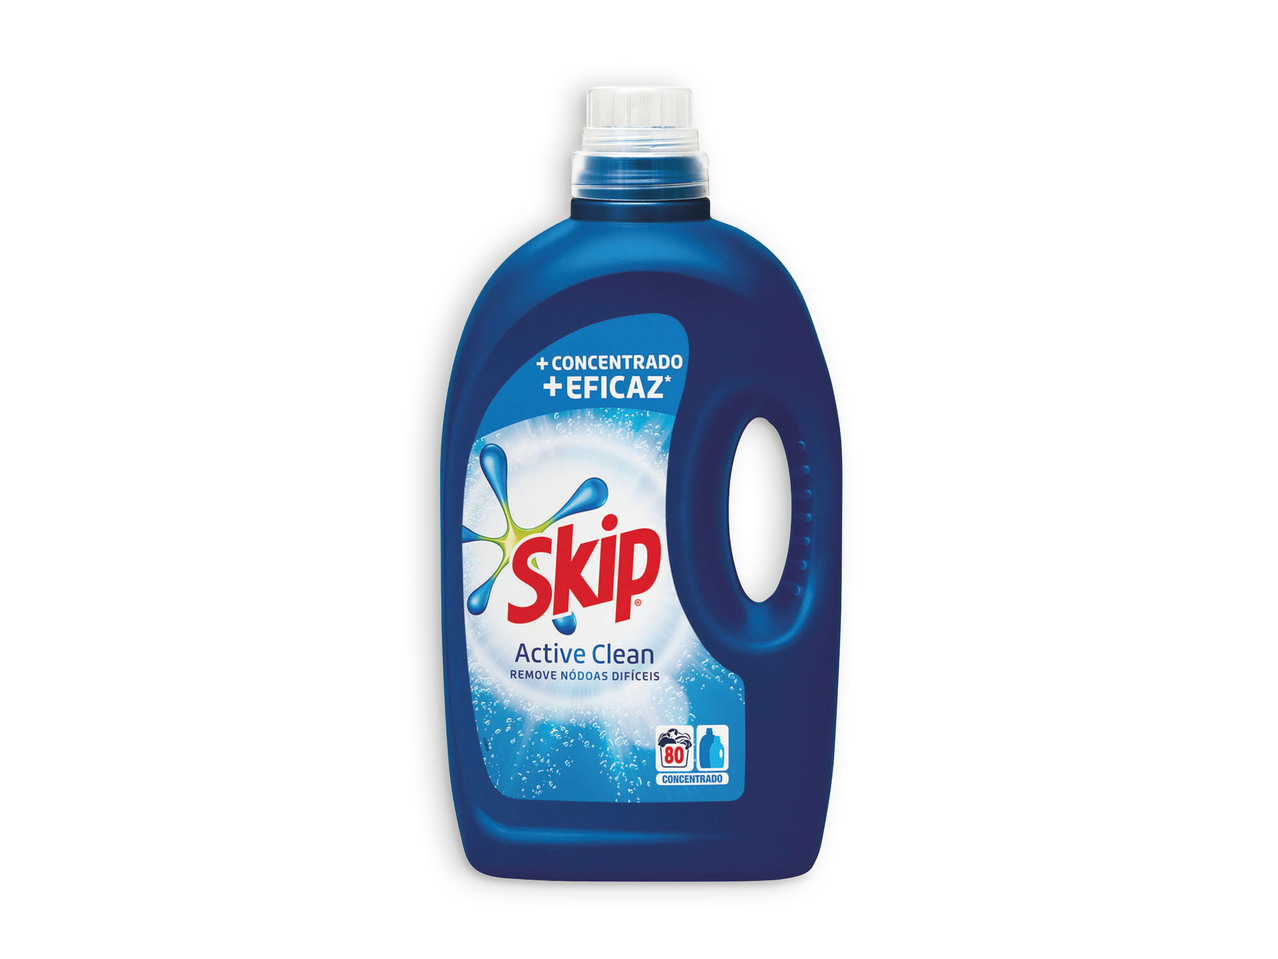 SKIP(R) Detergente Líquido Active Clean 80 Doses